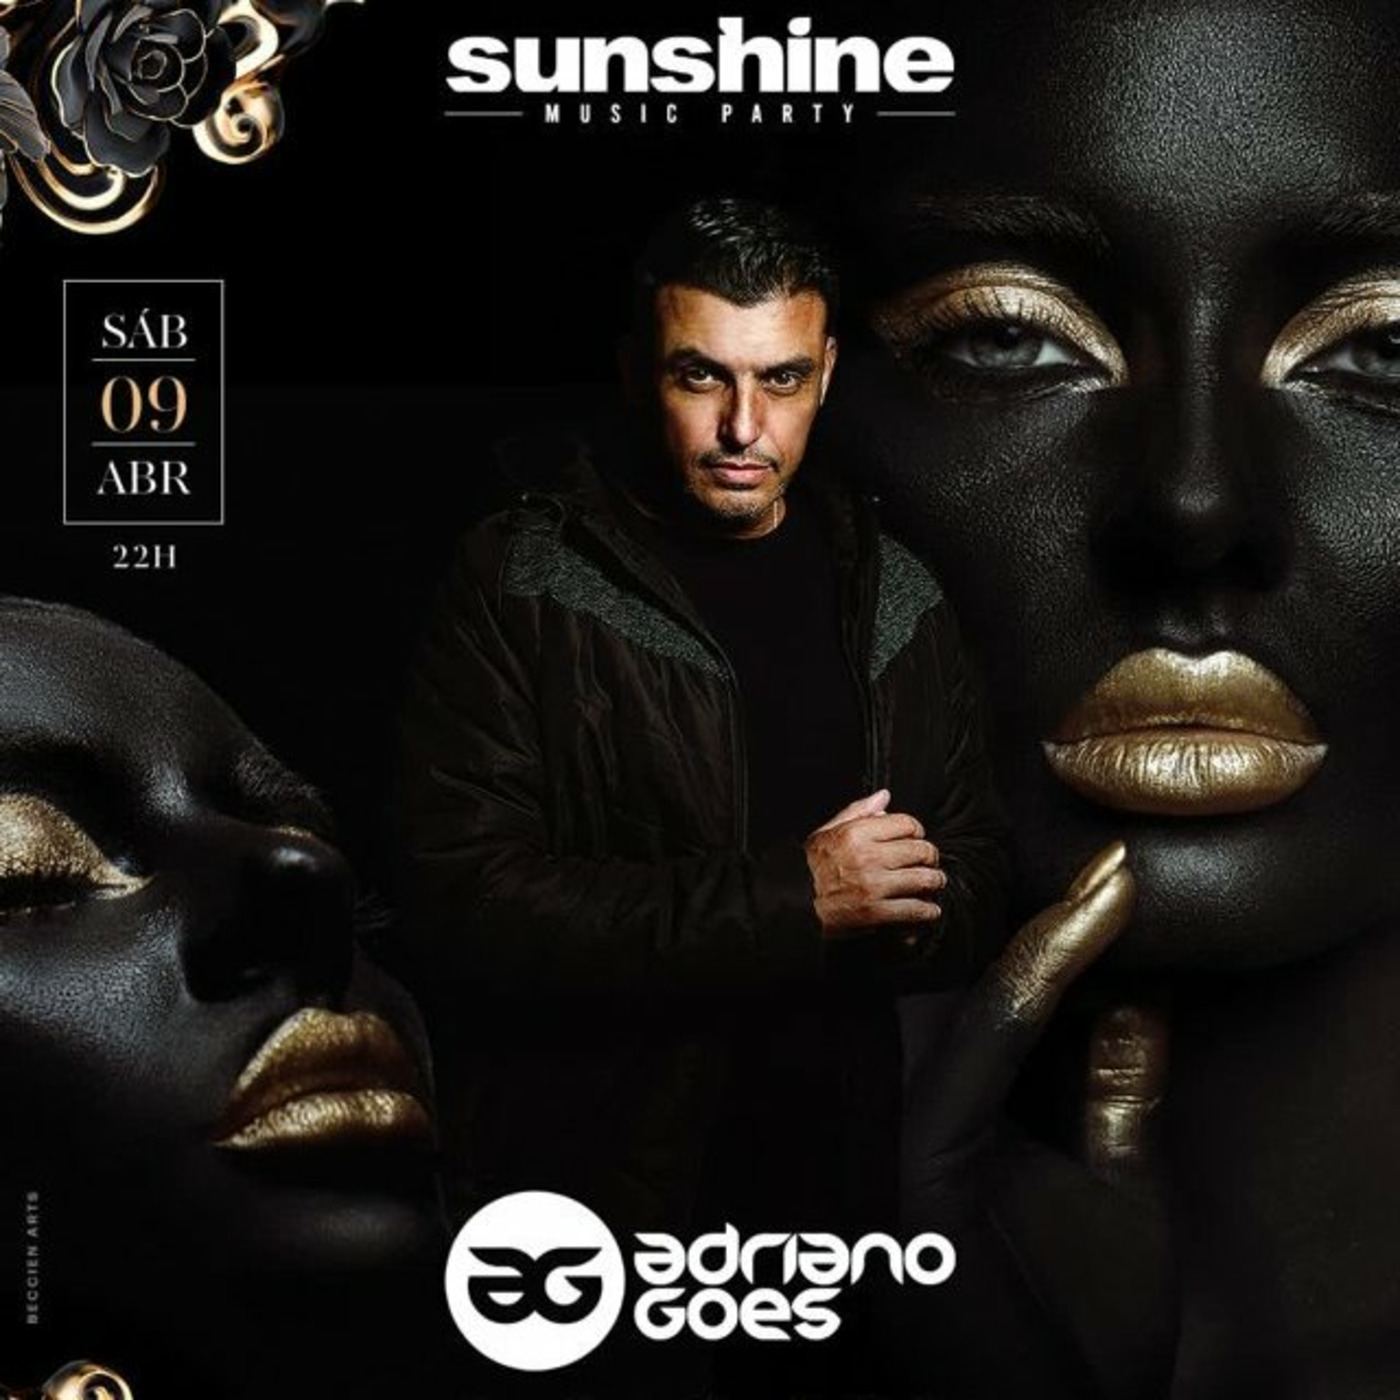 ADRIANO GOES - SUNSHINE MUSIC PARTY - BARRA MANSA - 09.04.2022